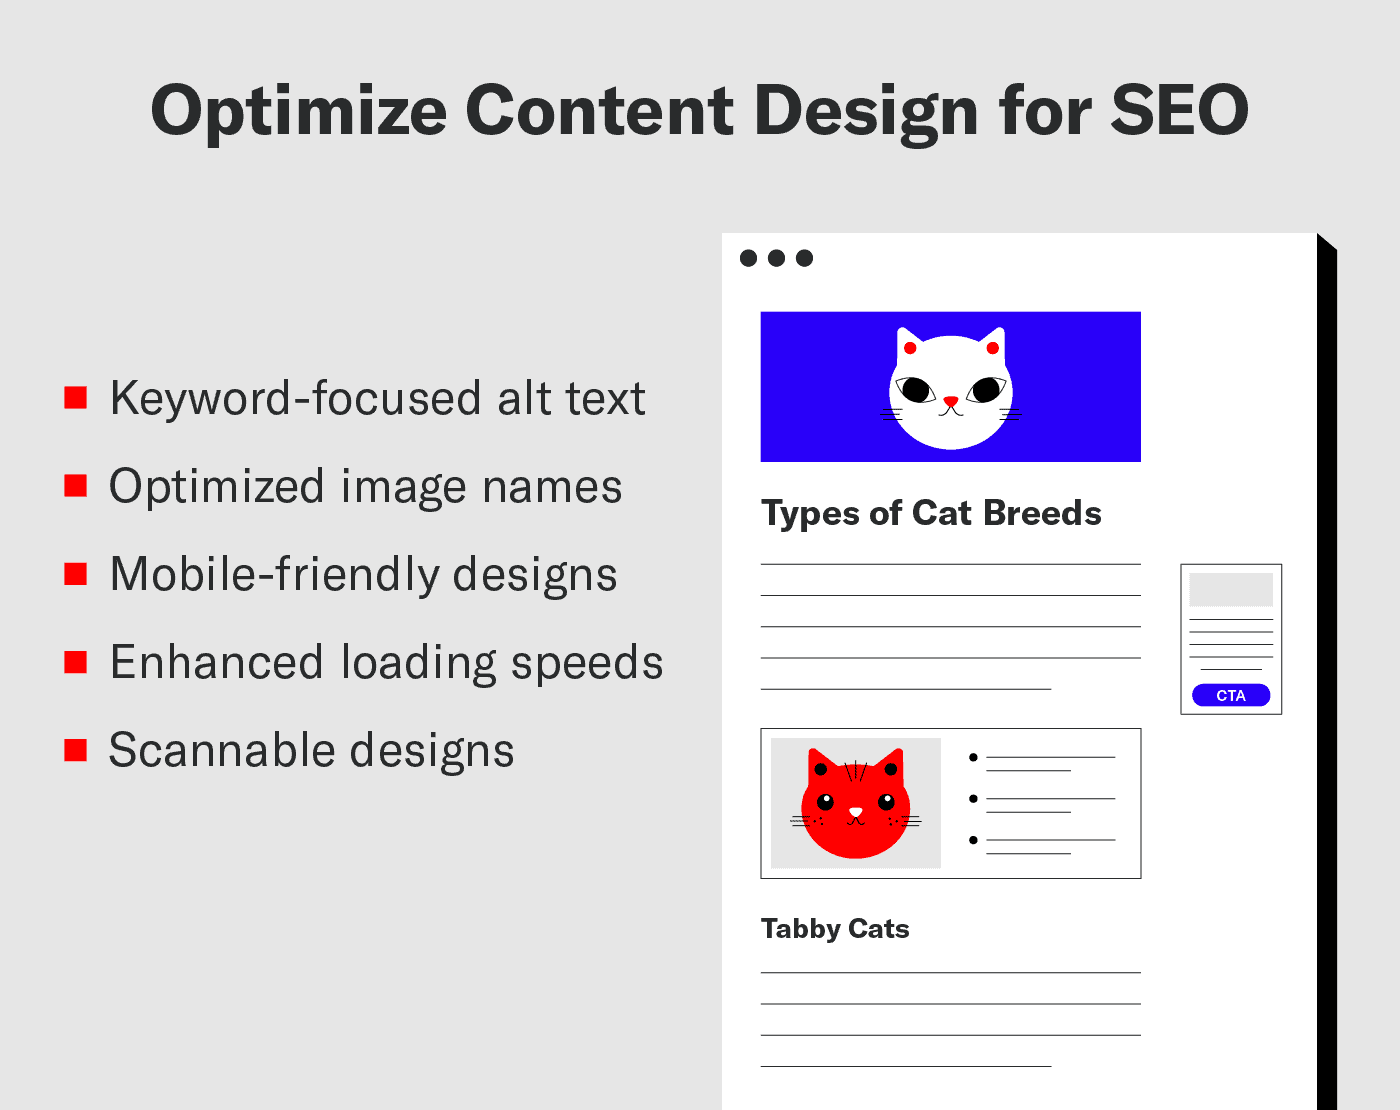 Optimize content design for SEO best practices.